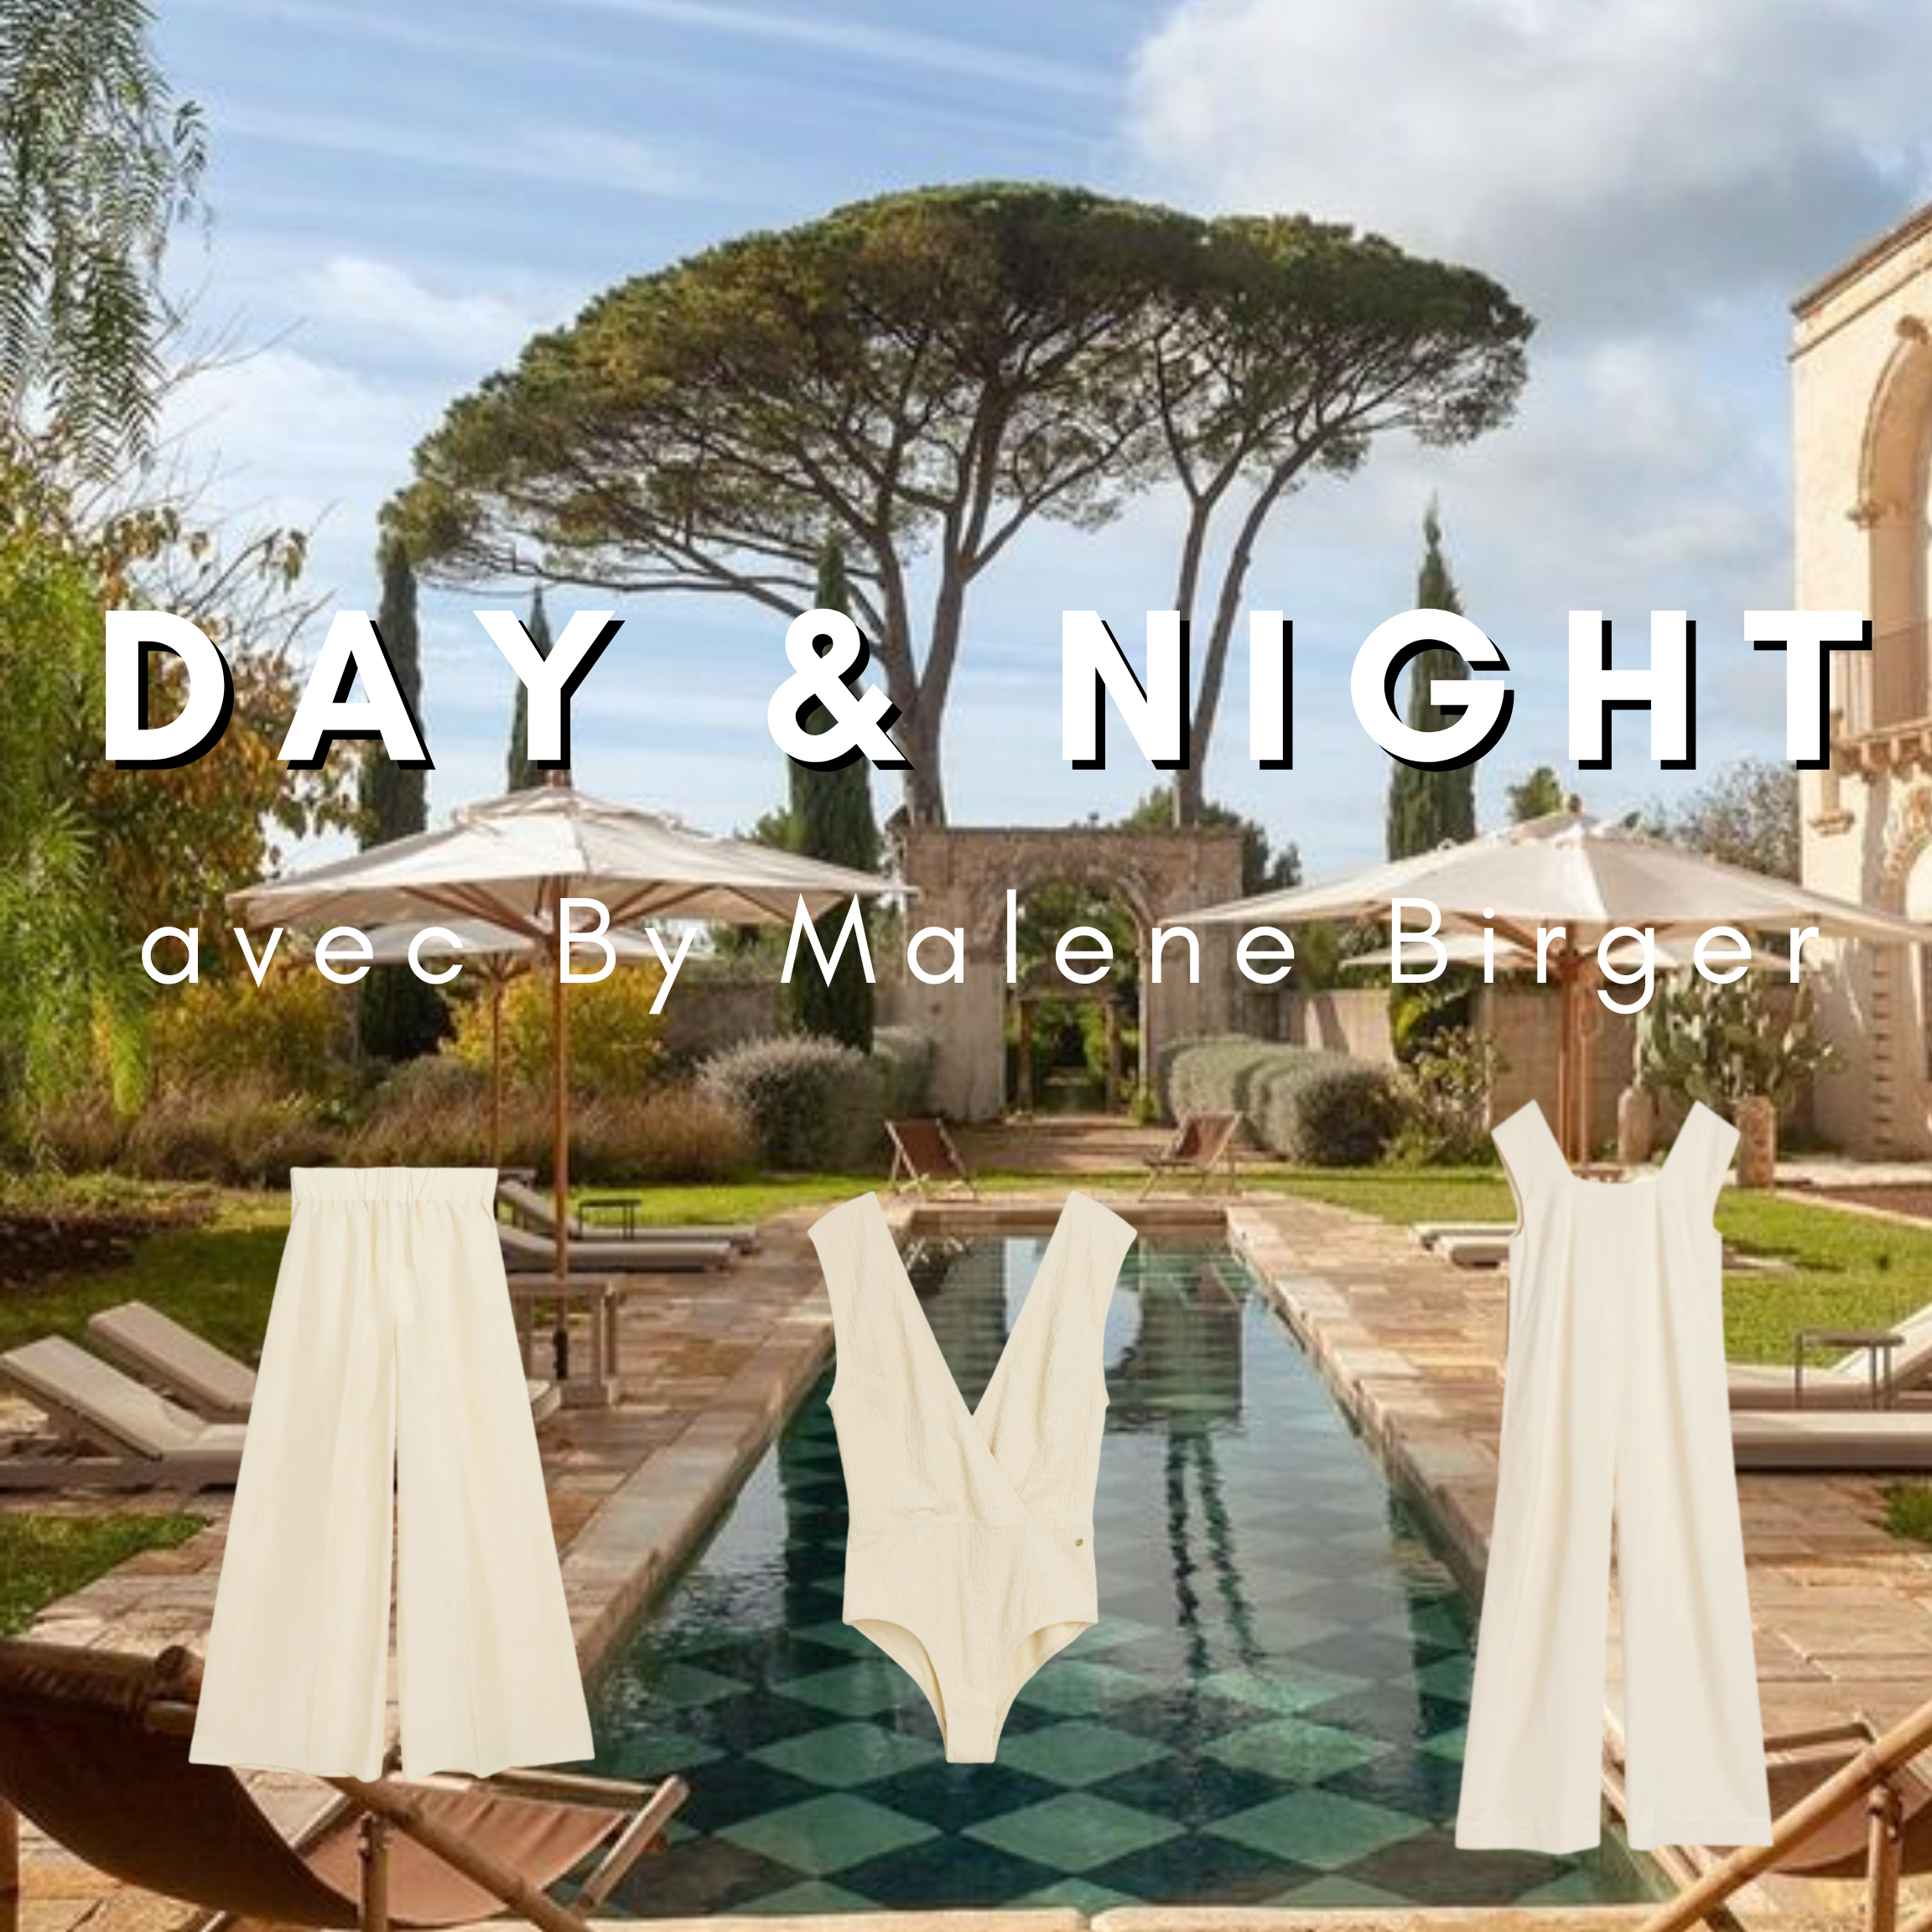 DAY & NIGHT avec By Malene Birger